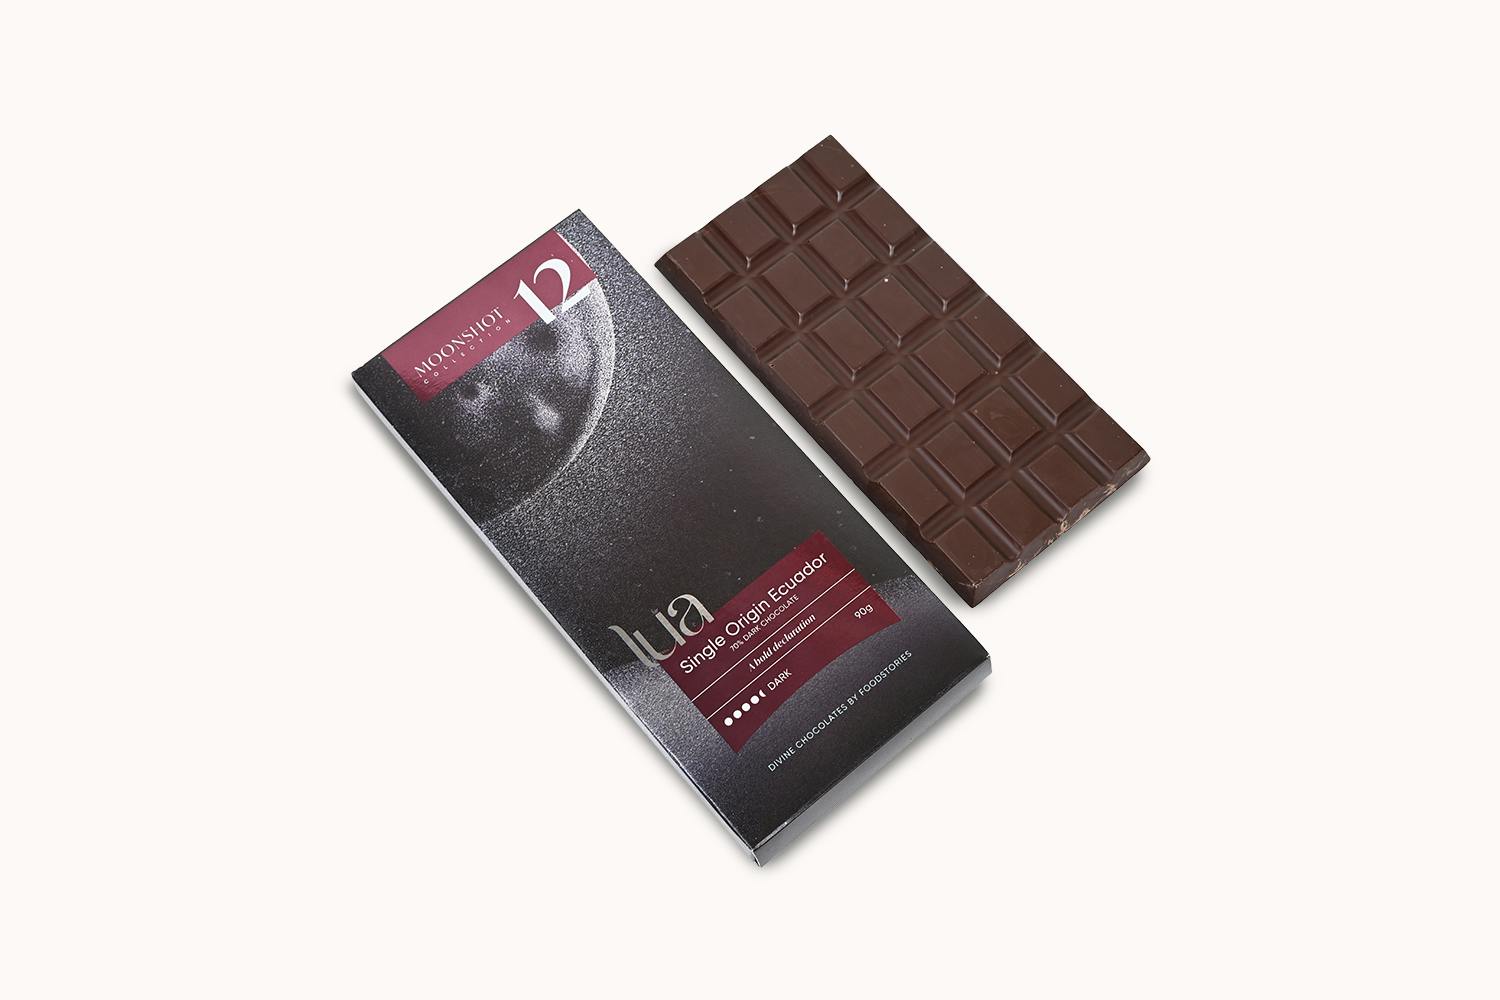 Lua Single Origin Ecuador 70% Chocolate Bar